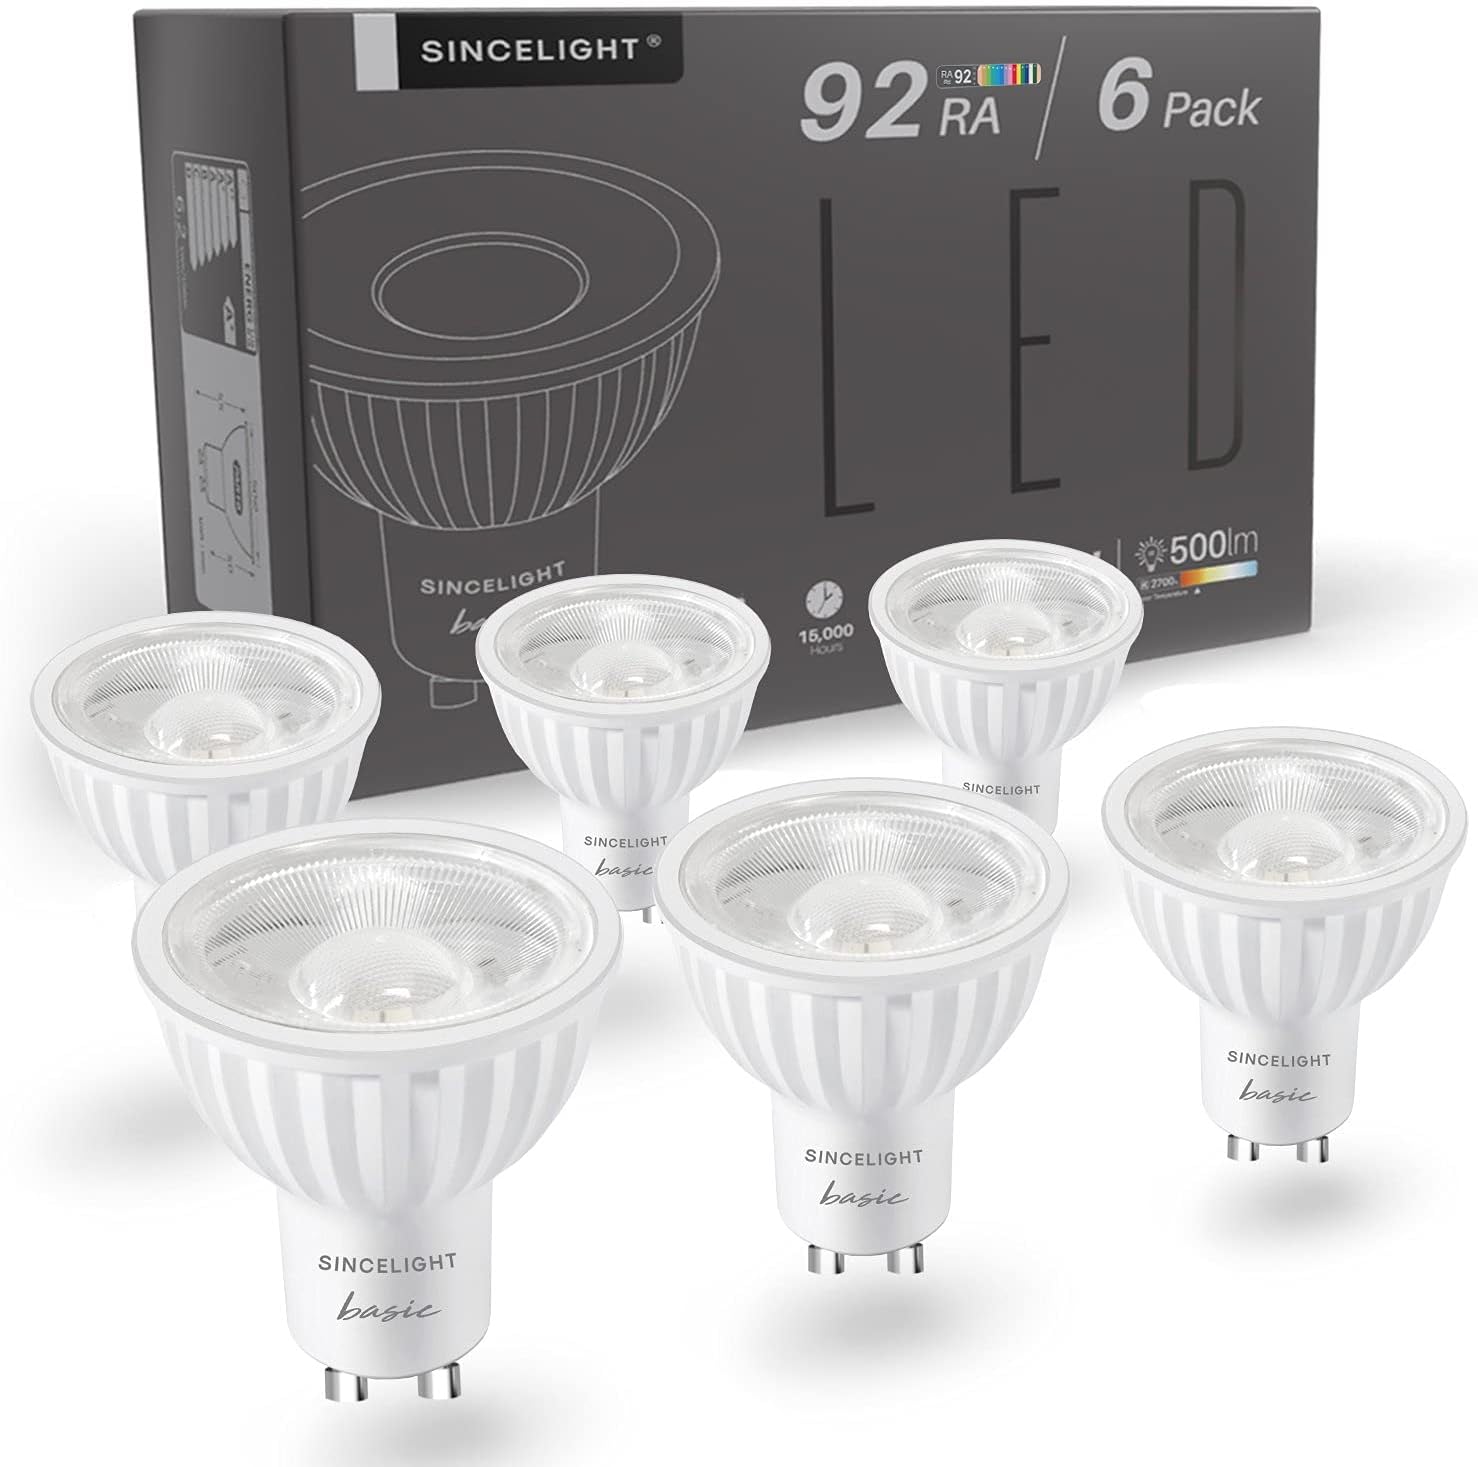 GU10 LED Lamp, Reflector, 500 Lumens 50W Halogen Equivalent, 6 Pack 0363